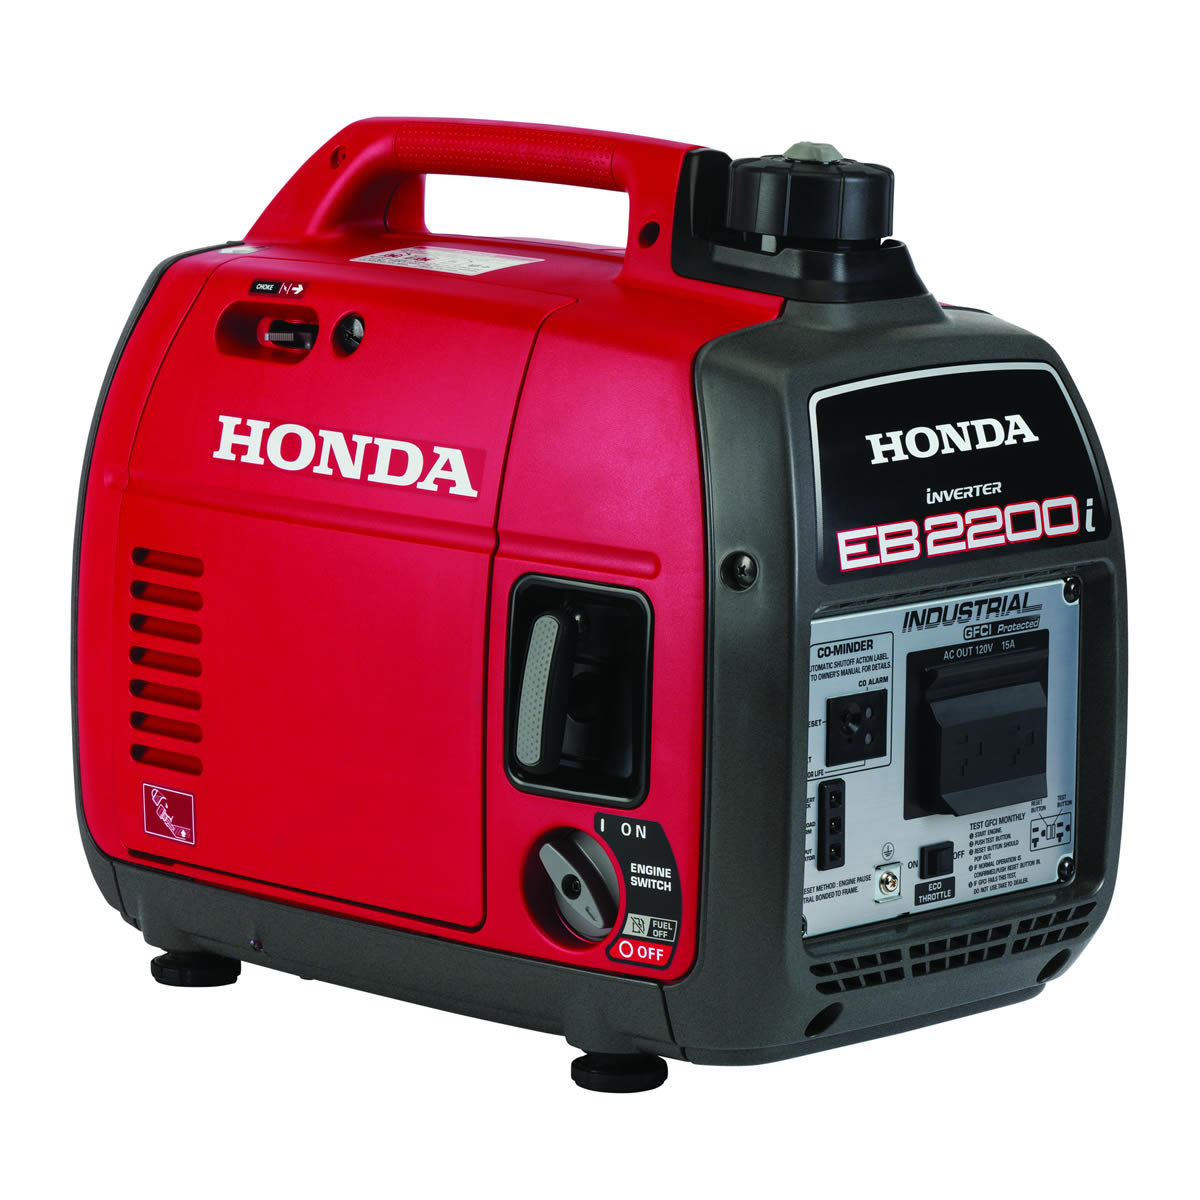 Honda Generator Overview